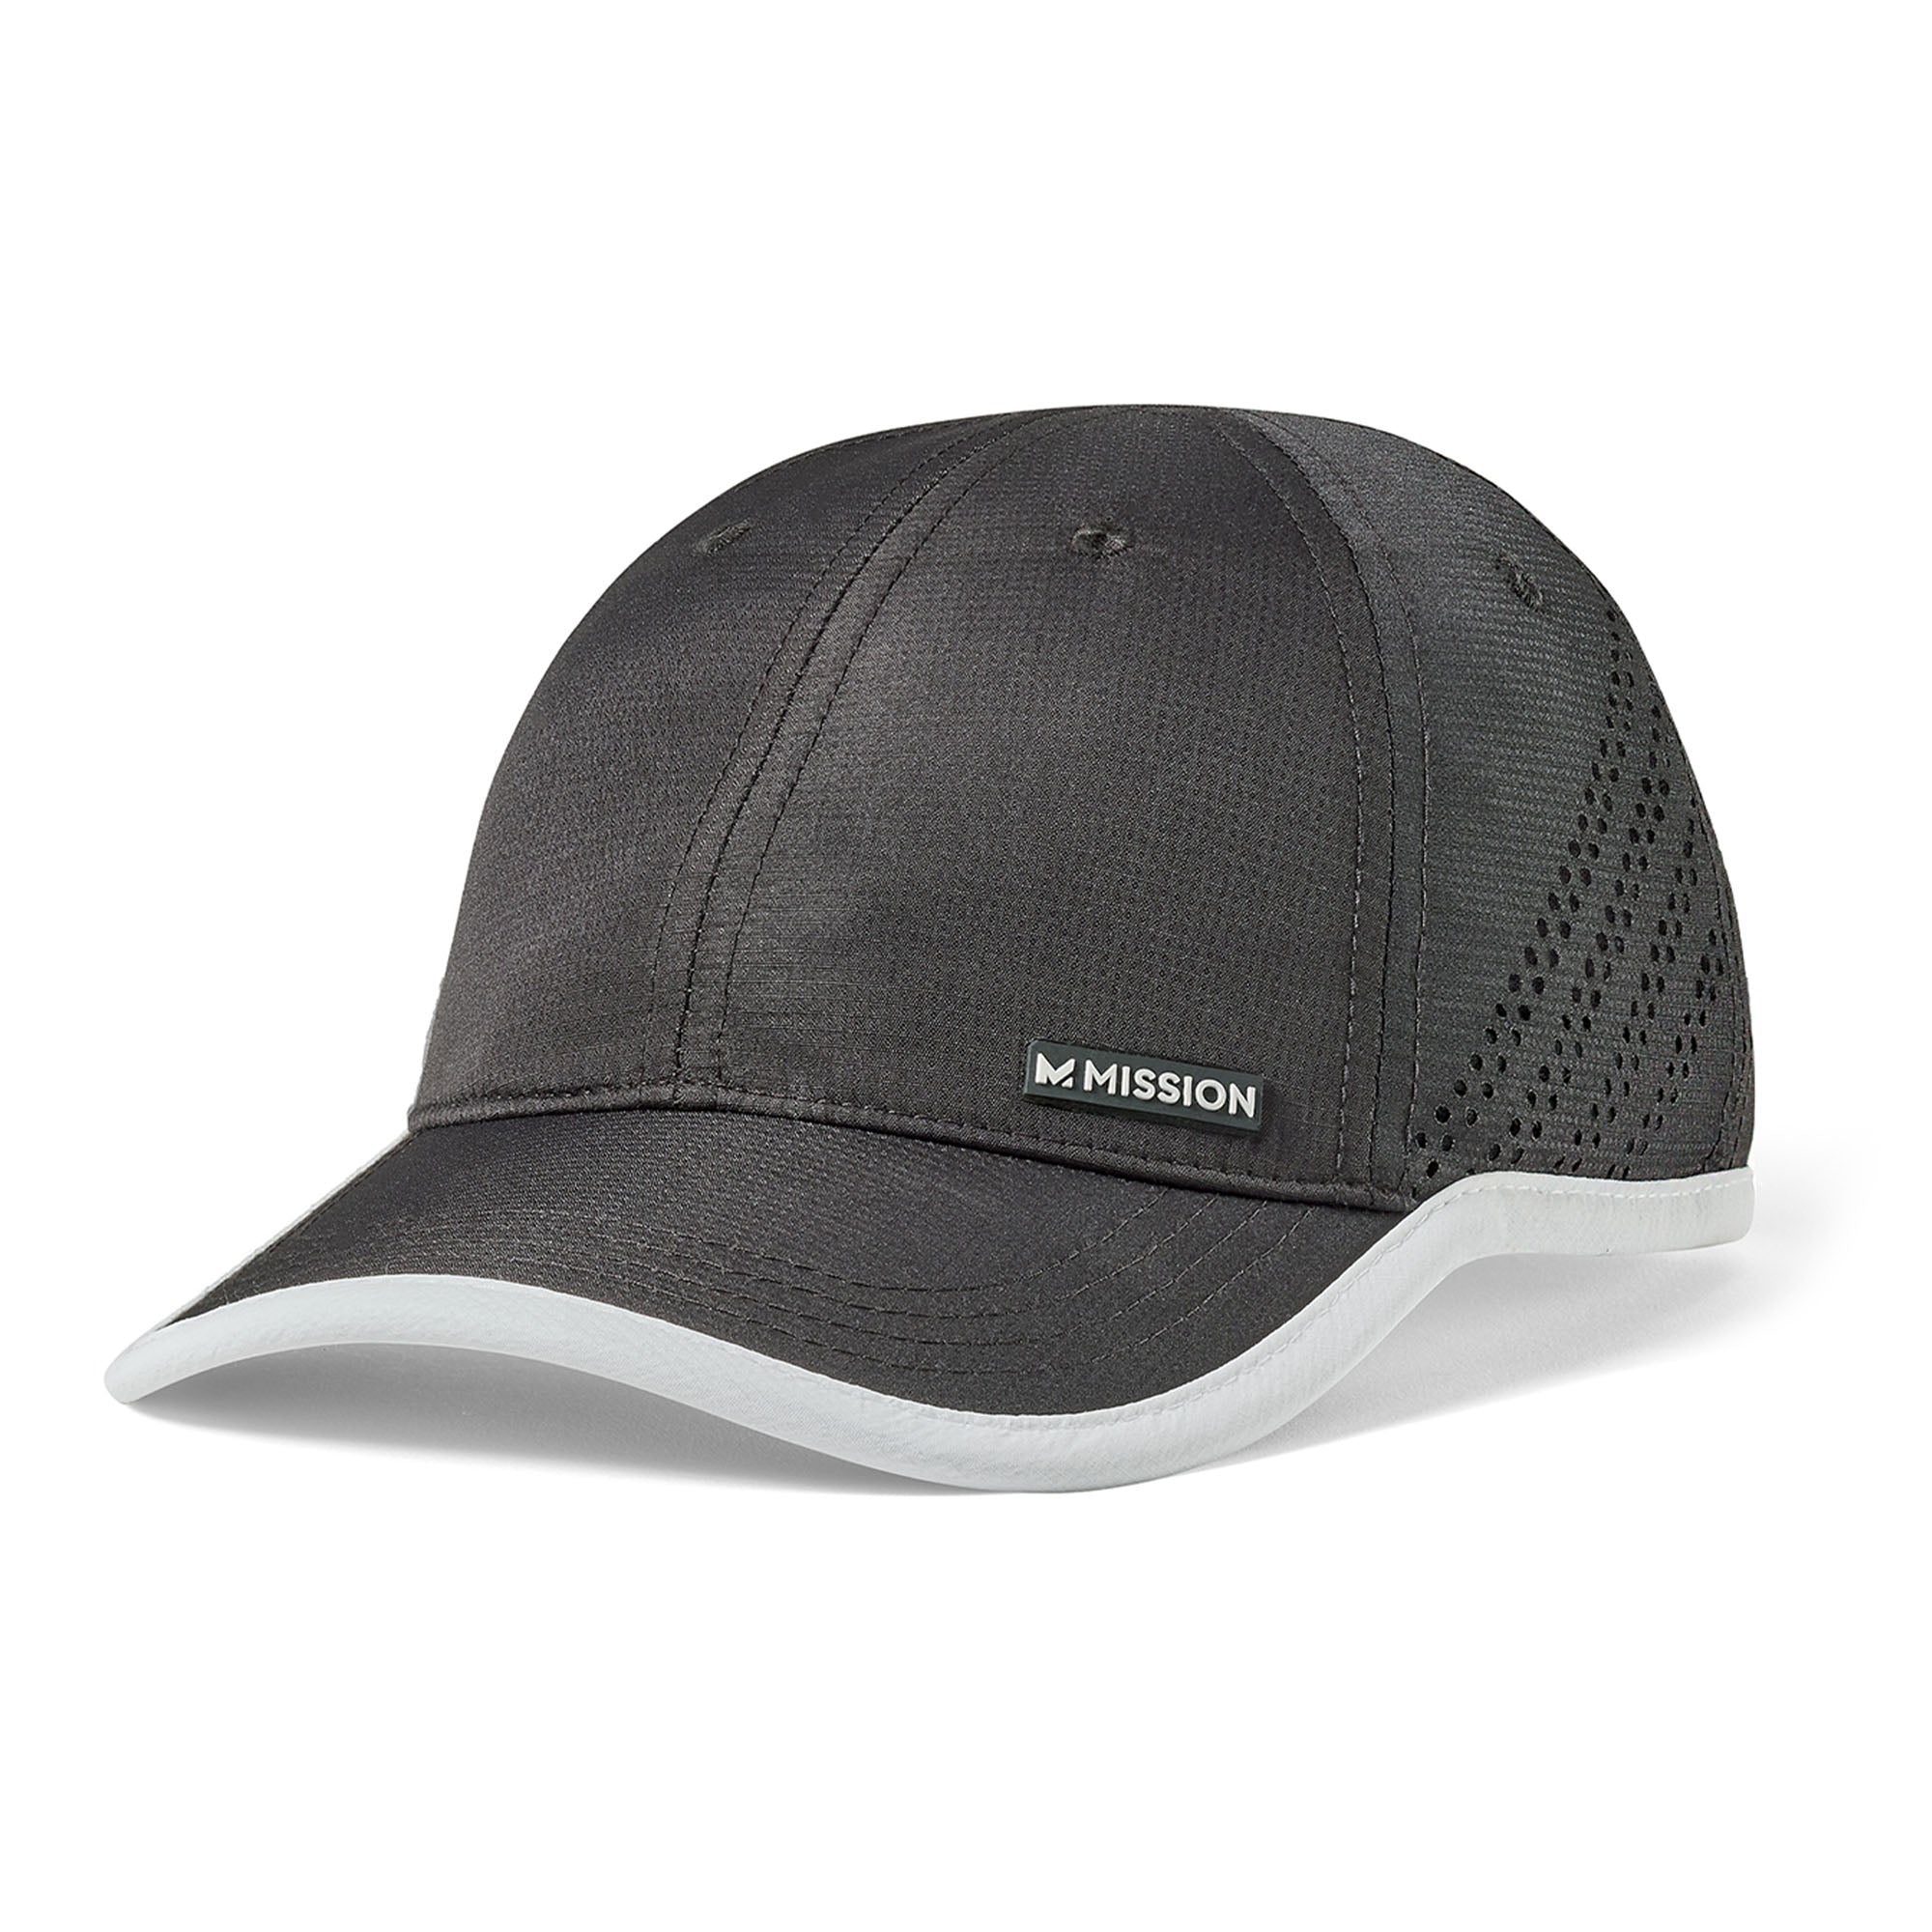 Cooling Marathon Hat Caps MISSION One Size Black / Bright White 